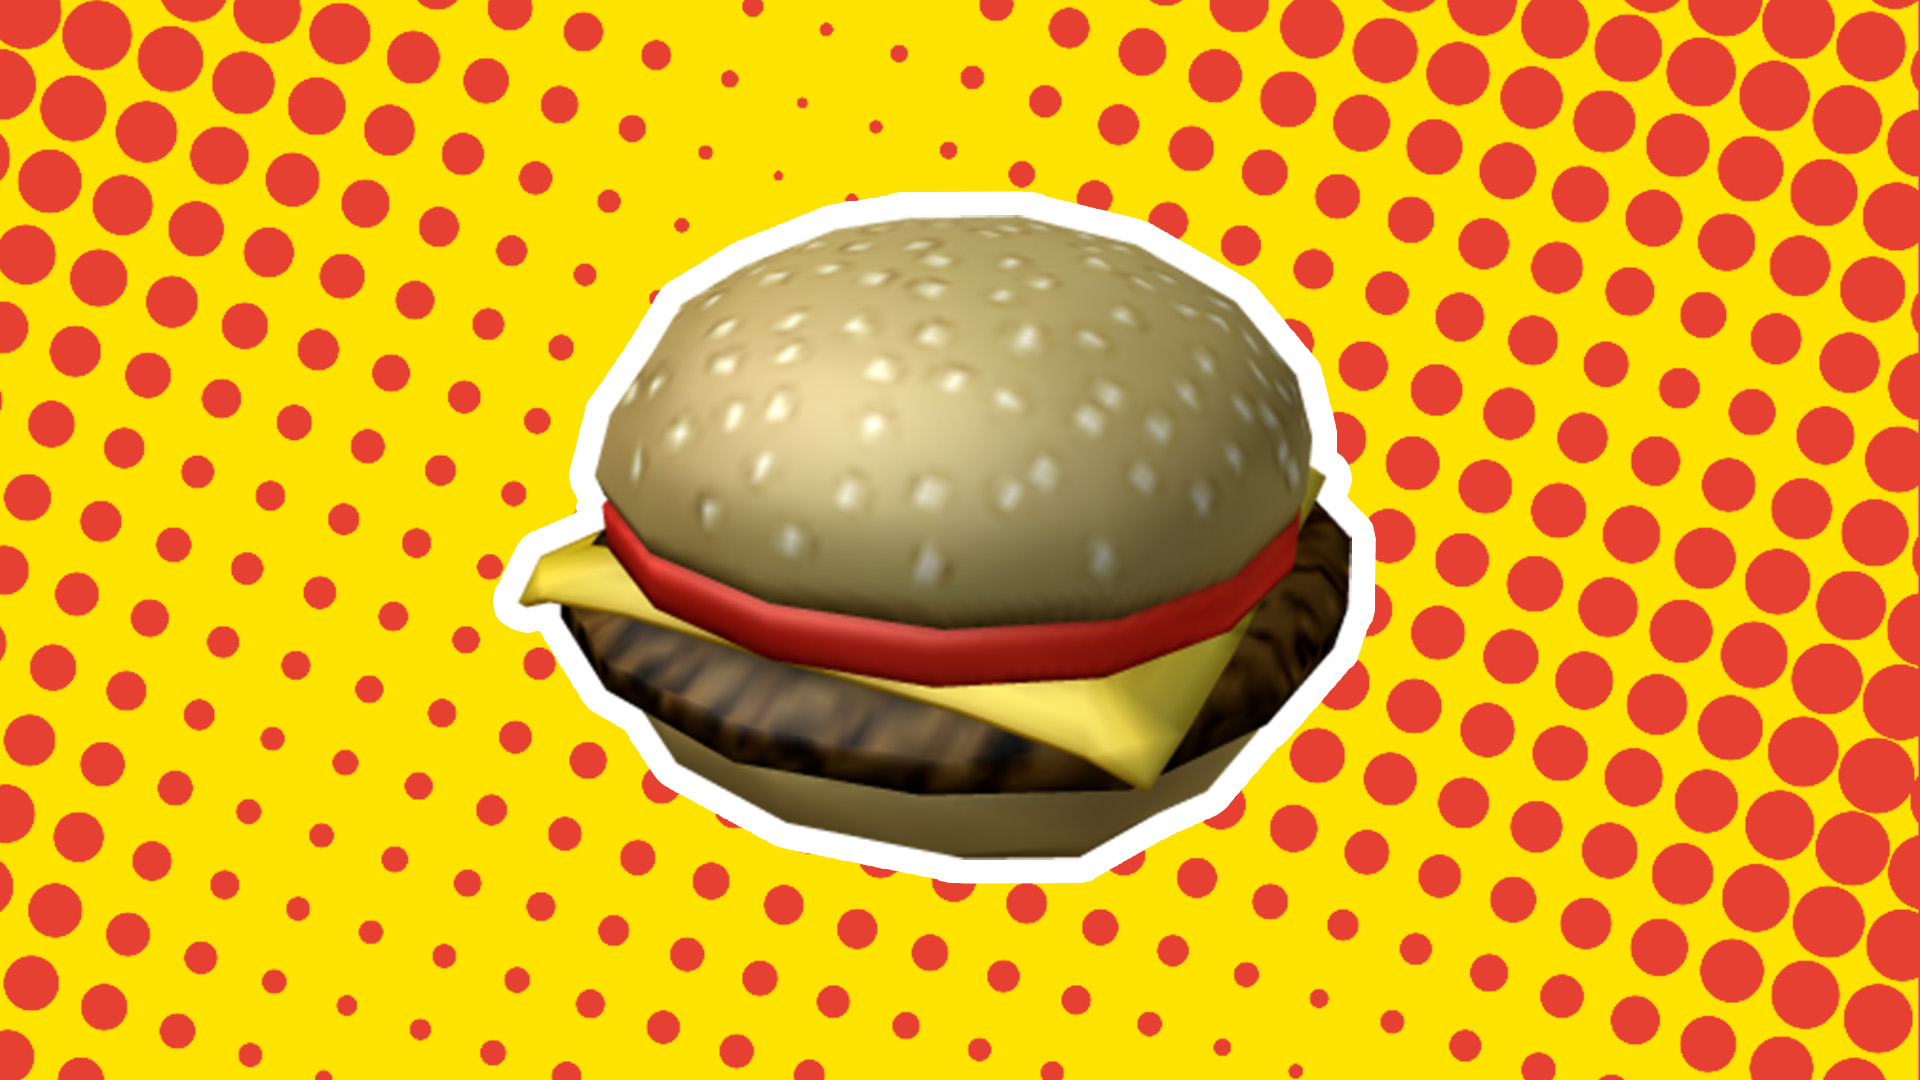 A Roblox hamburger